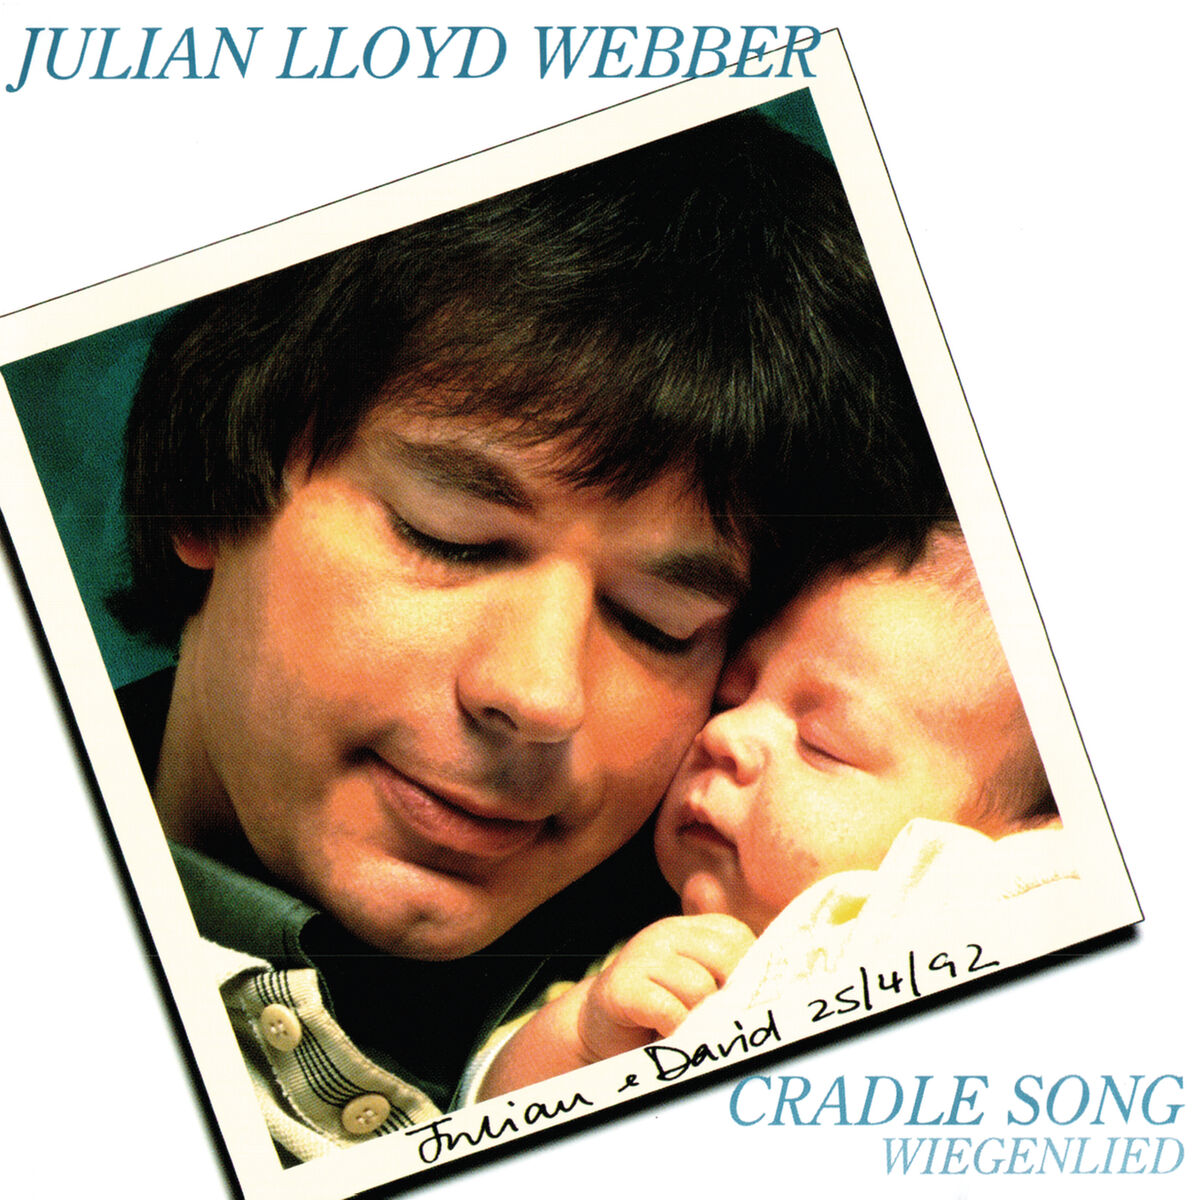 Julian Lloyd Webber: albums